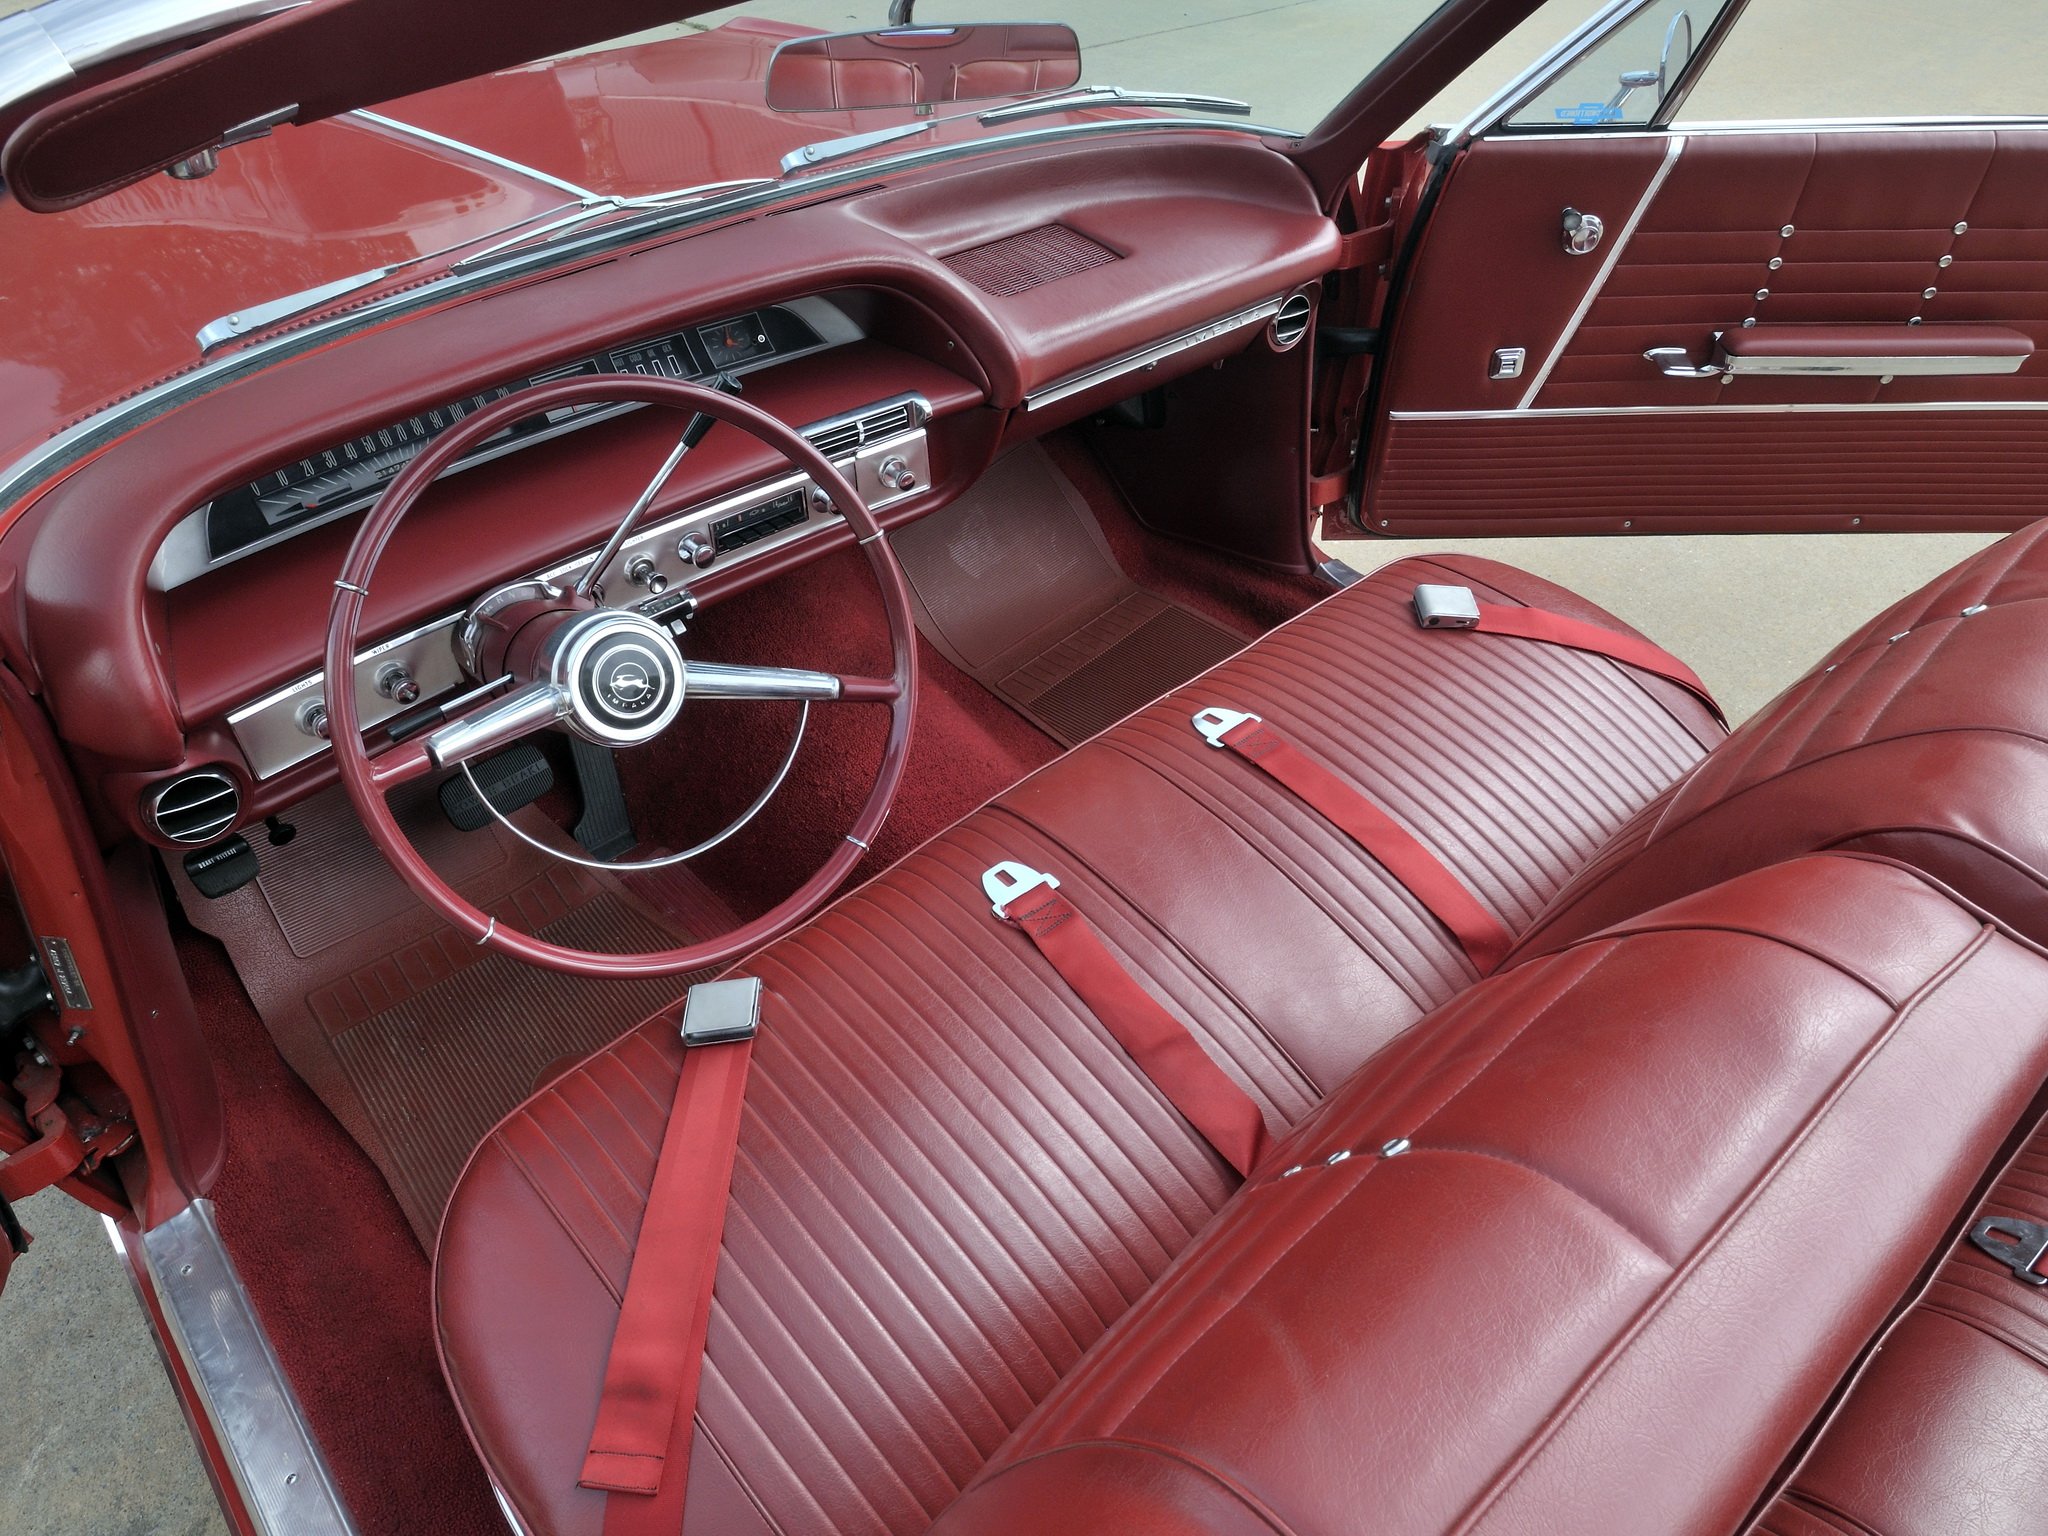 1964 impala 4 interior doors